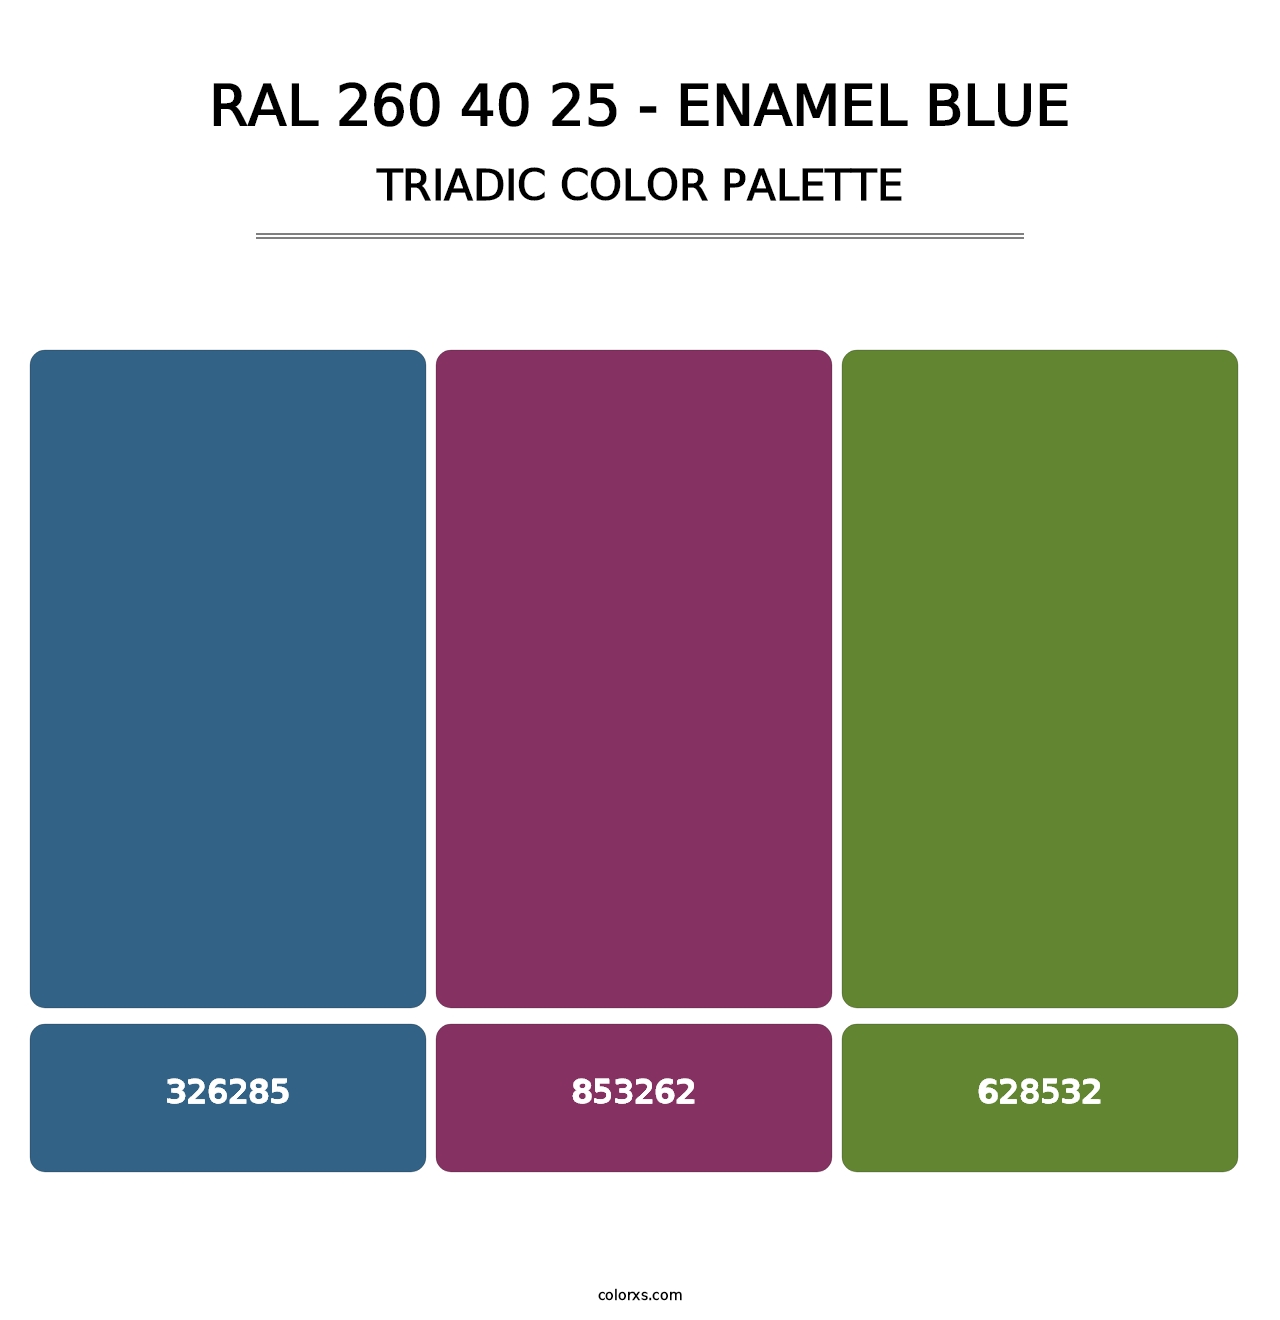 RAL 260 40 25 - Enamel Blue - Triadic Color Palette